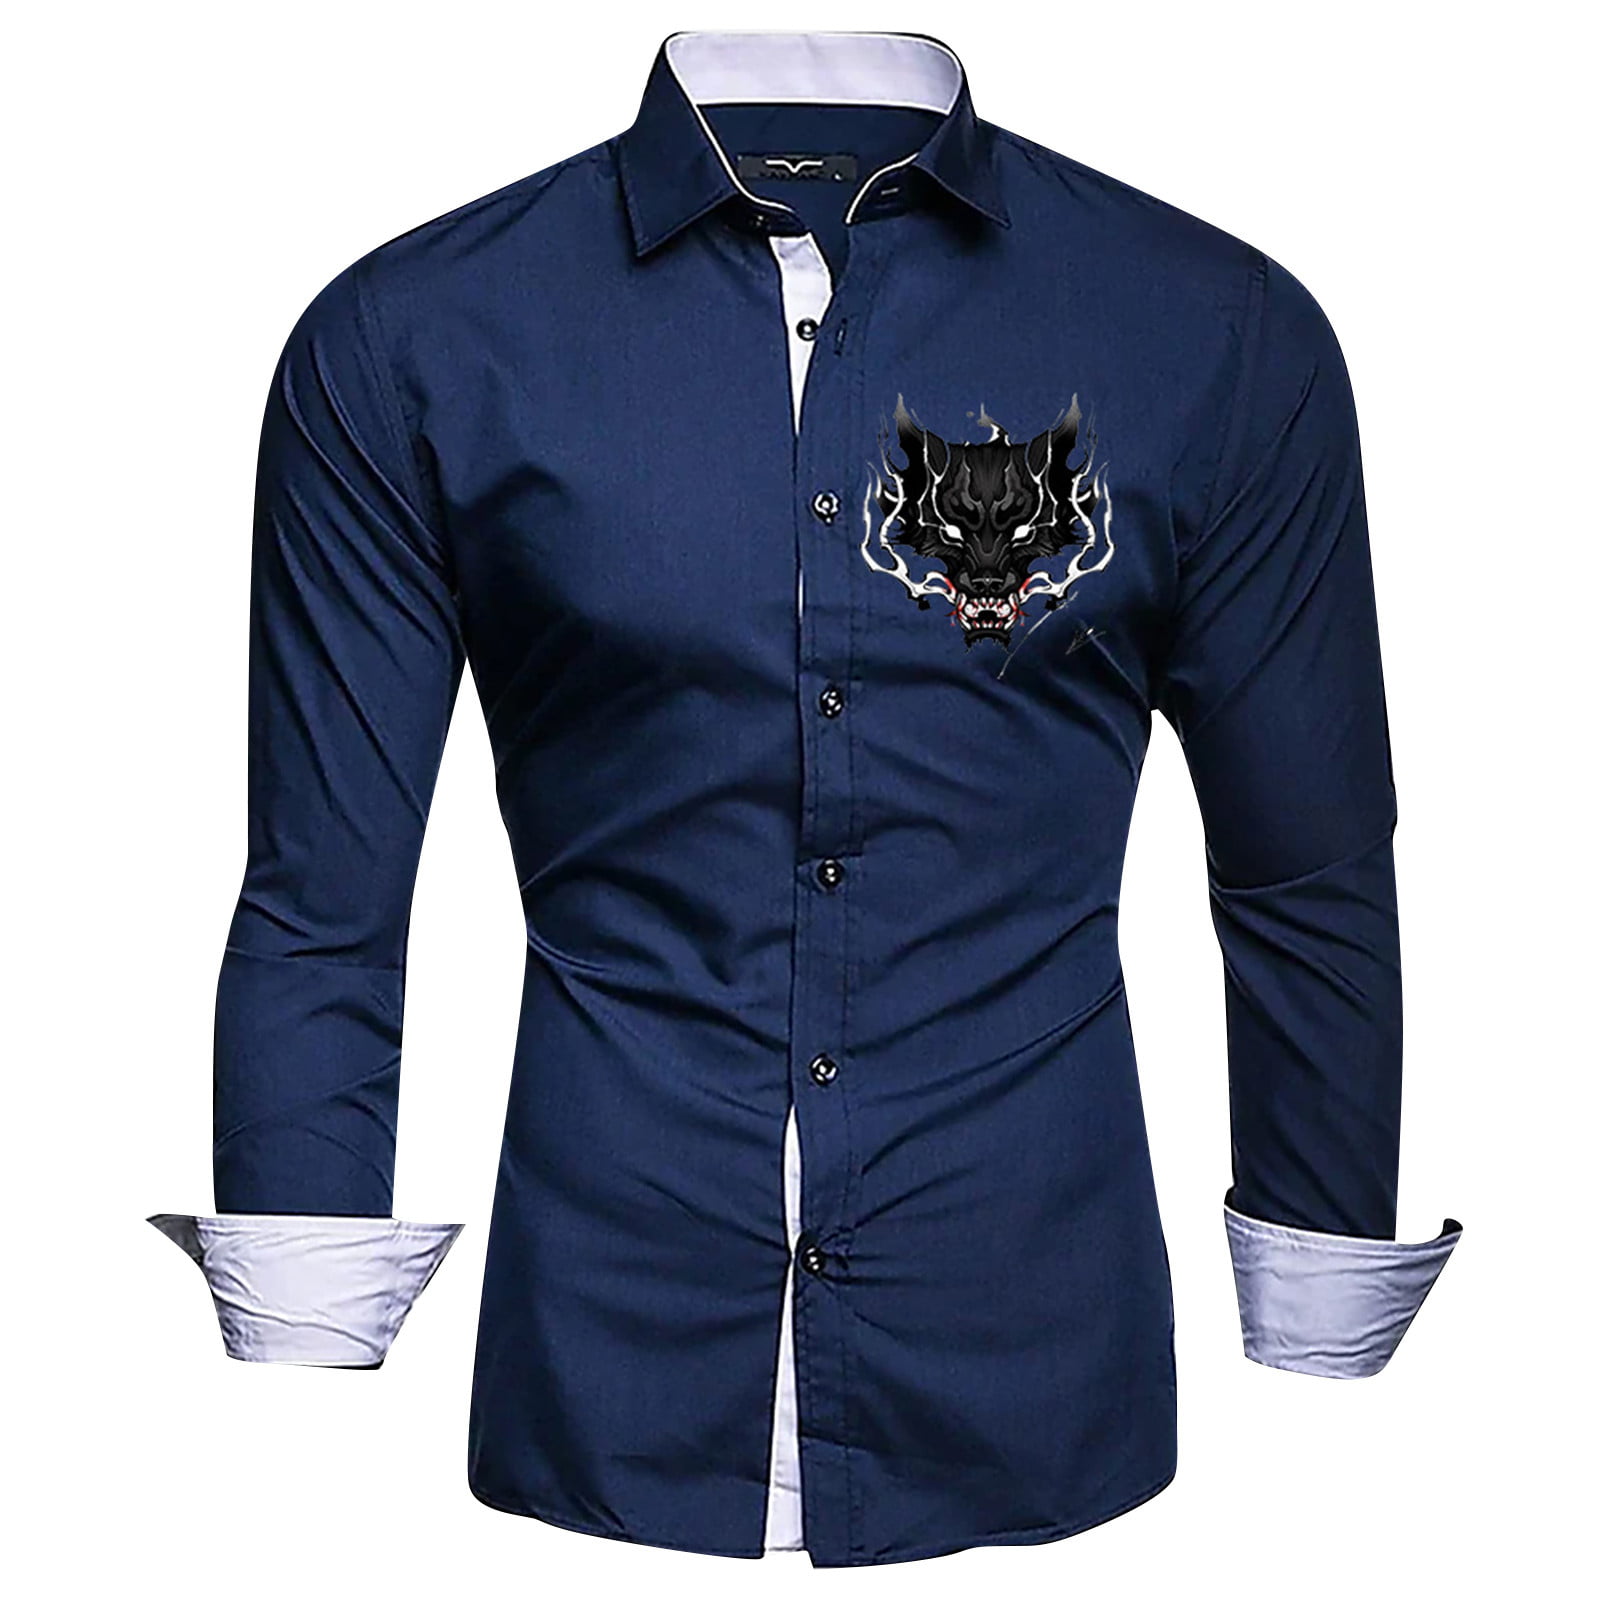 ZXHACSJ Designer Spring Summer Men's Casual Cotton Linen Solid Color Long  Sleeve Shirts Loose Shirts Navy L